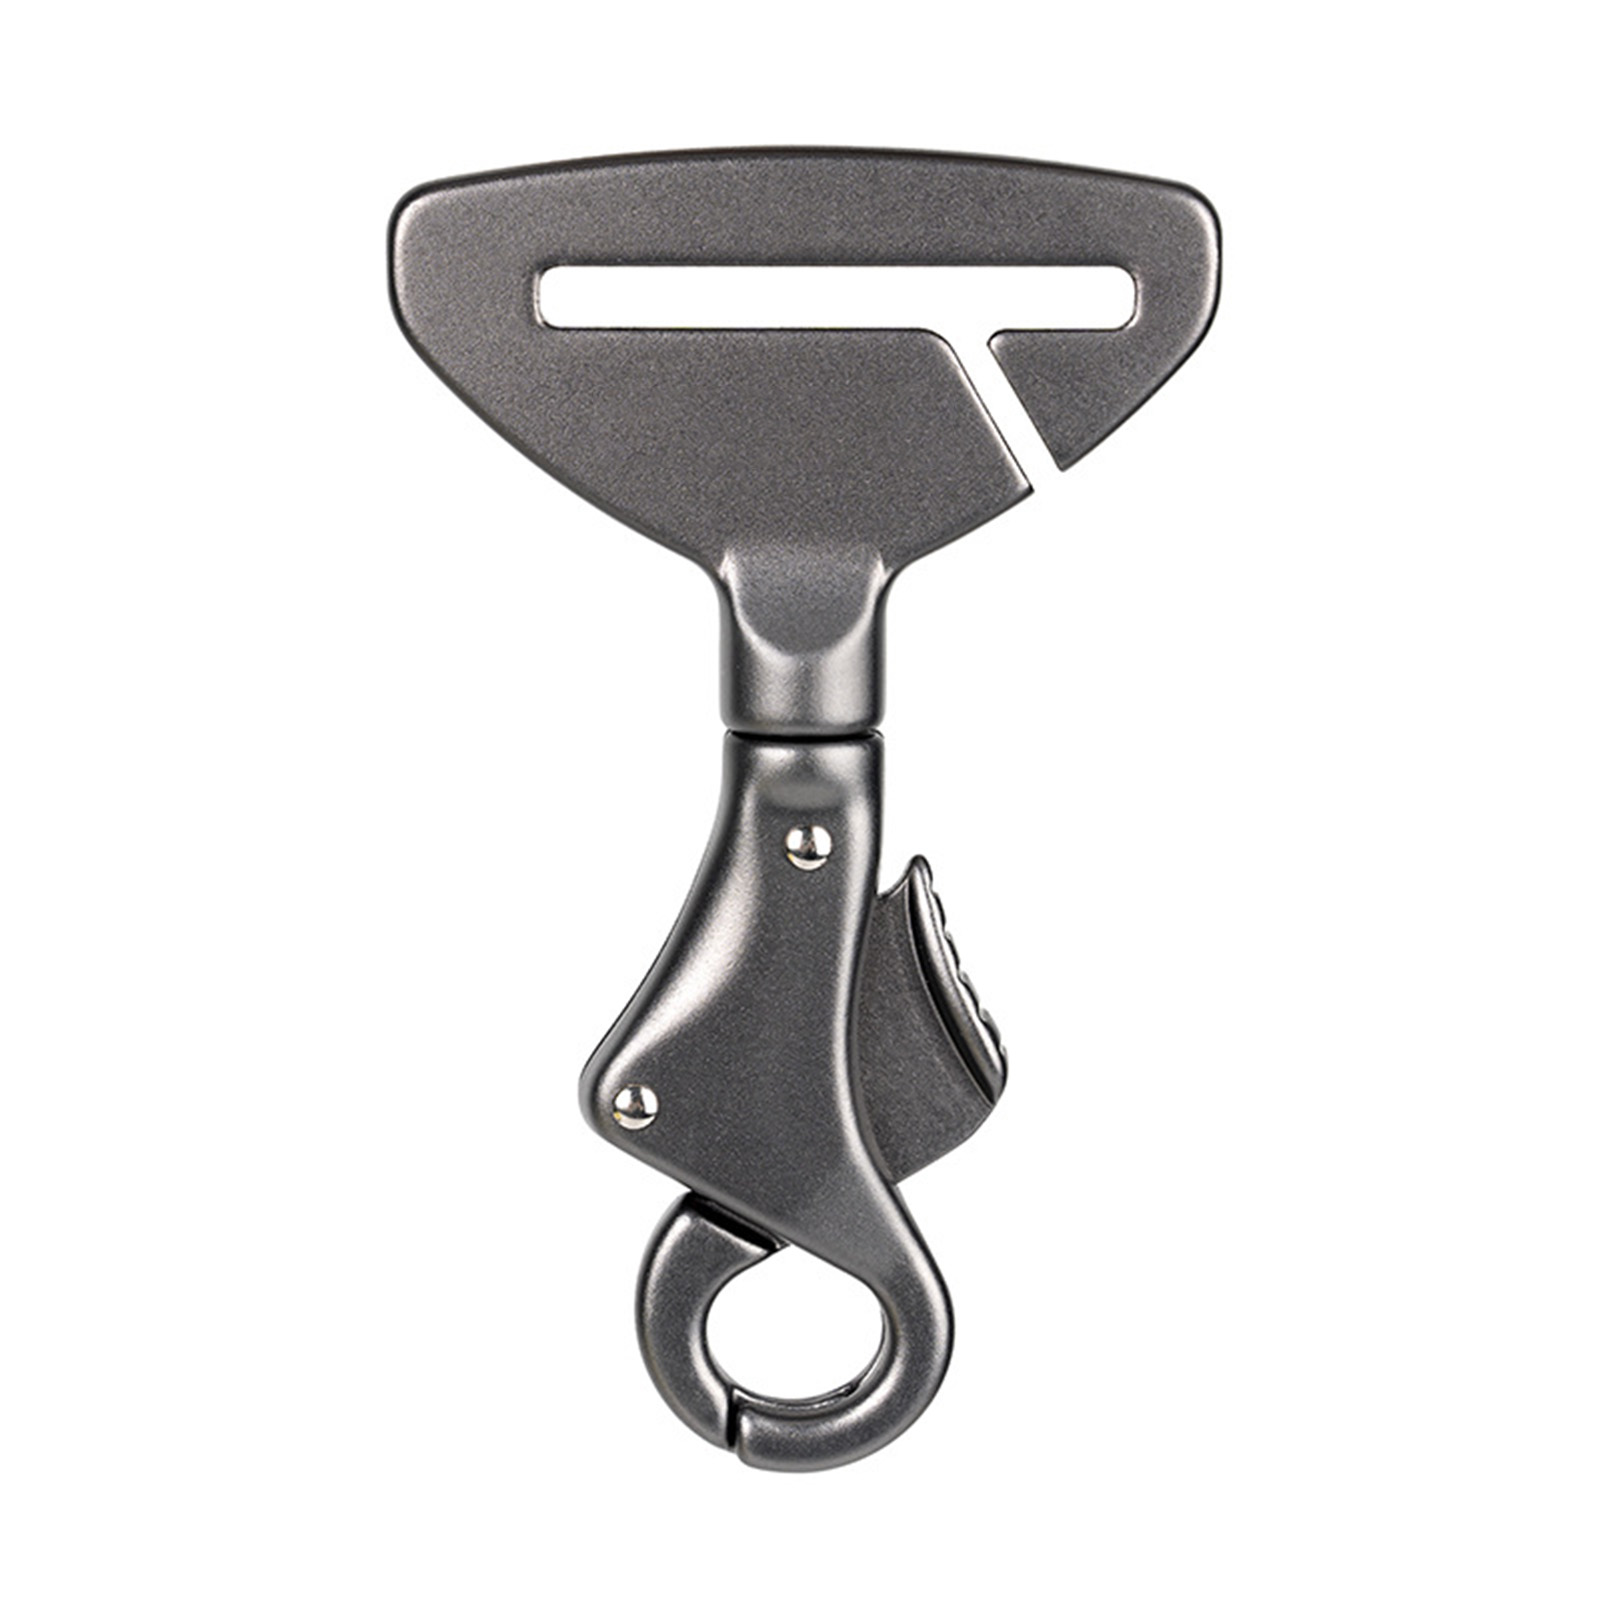 WISTIC Portable Vehicle Seat Belt Lock Safety Lightweight Sturdy Long